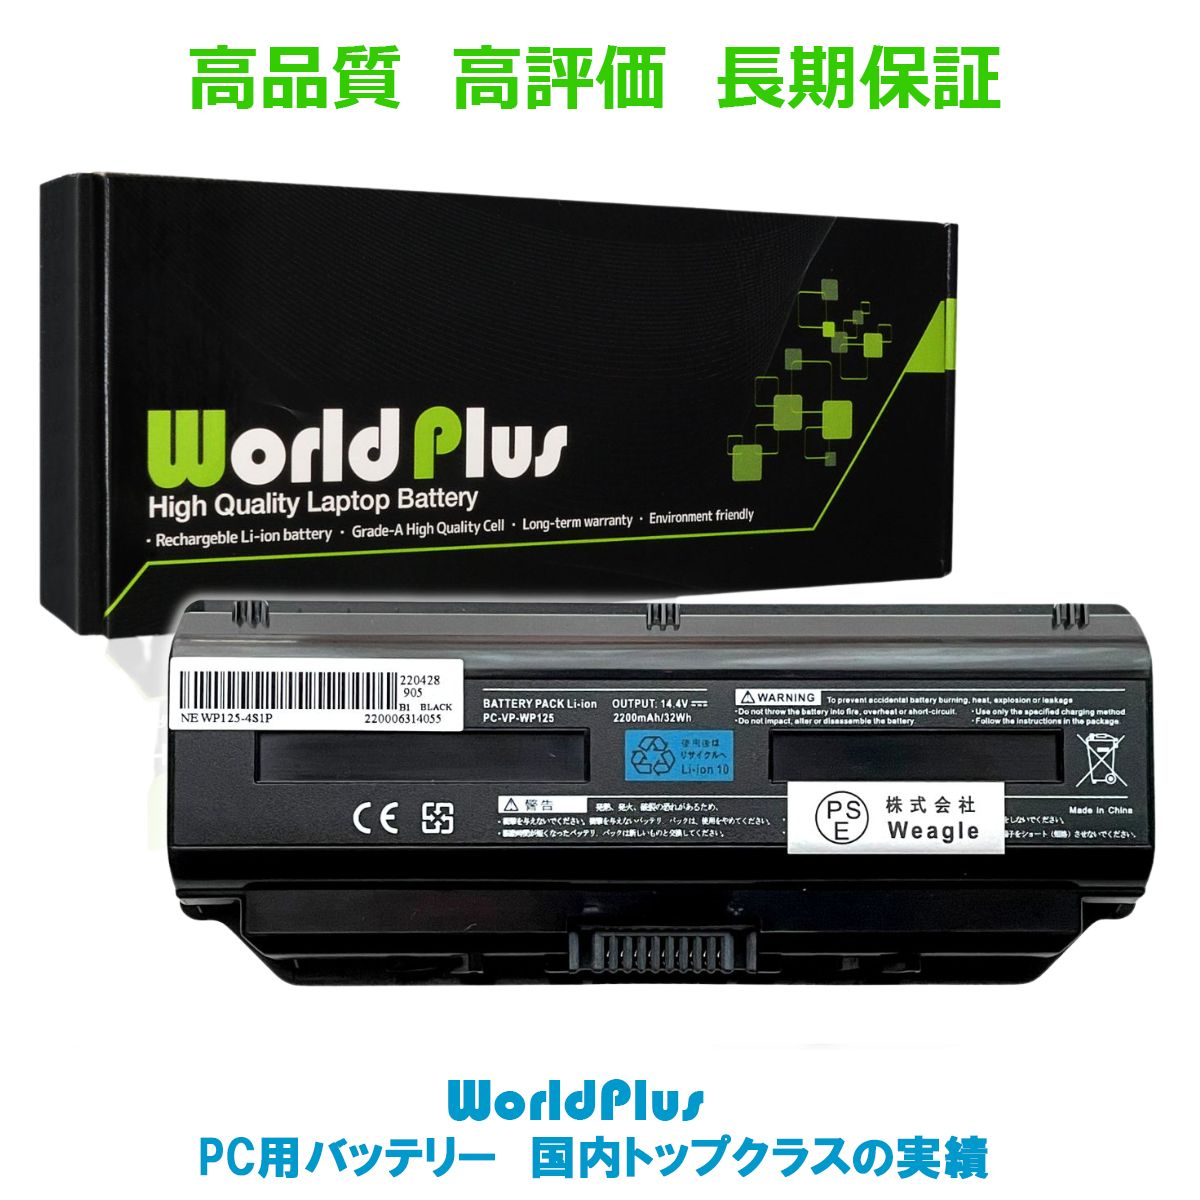 WorldPlus сменный аккумулятор PC-VP-WP125 для замены NEC Lavie L / G / Note Standard / Direct NS соответствует 